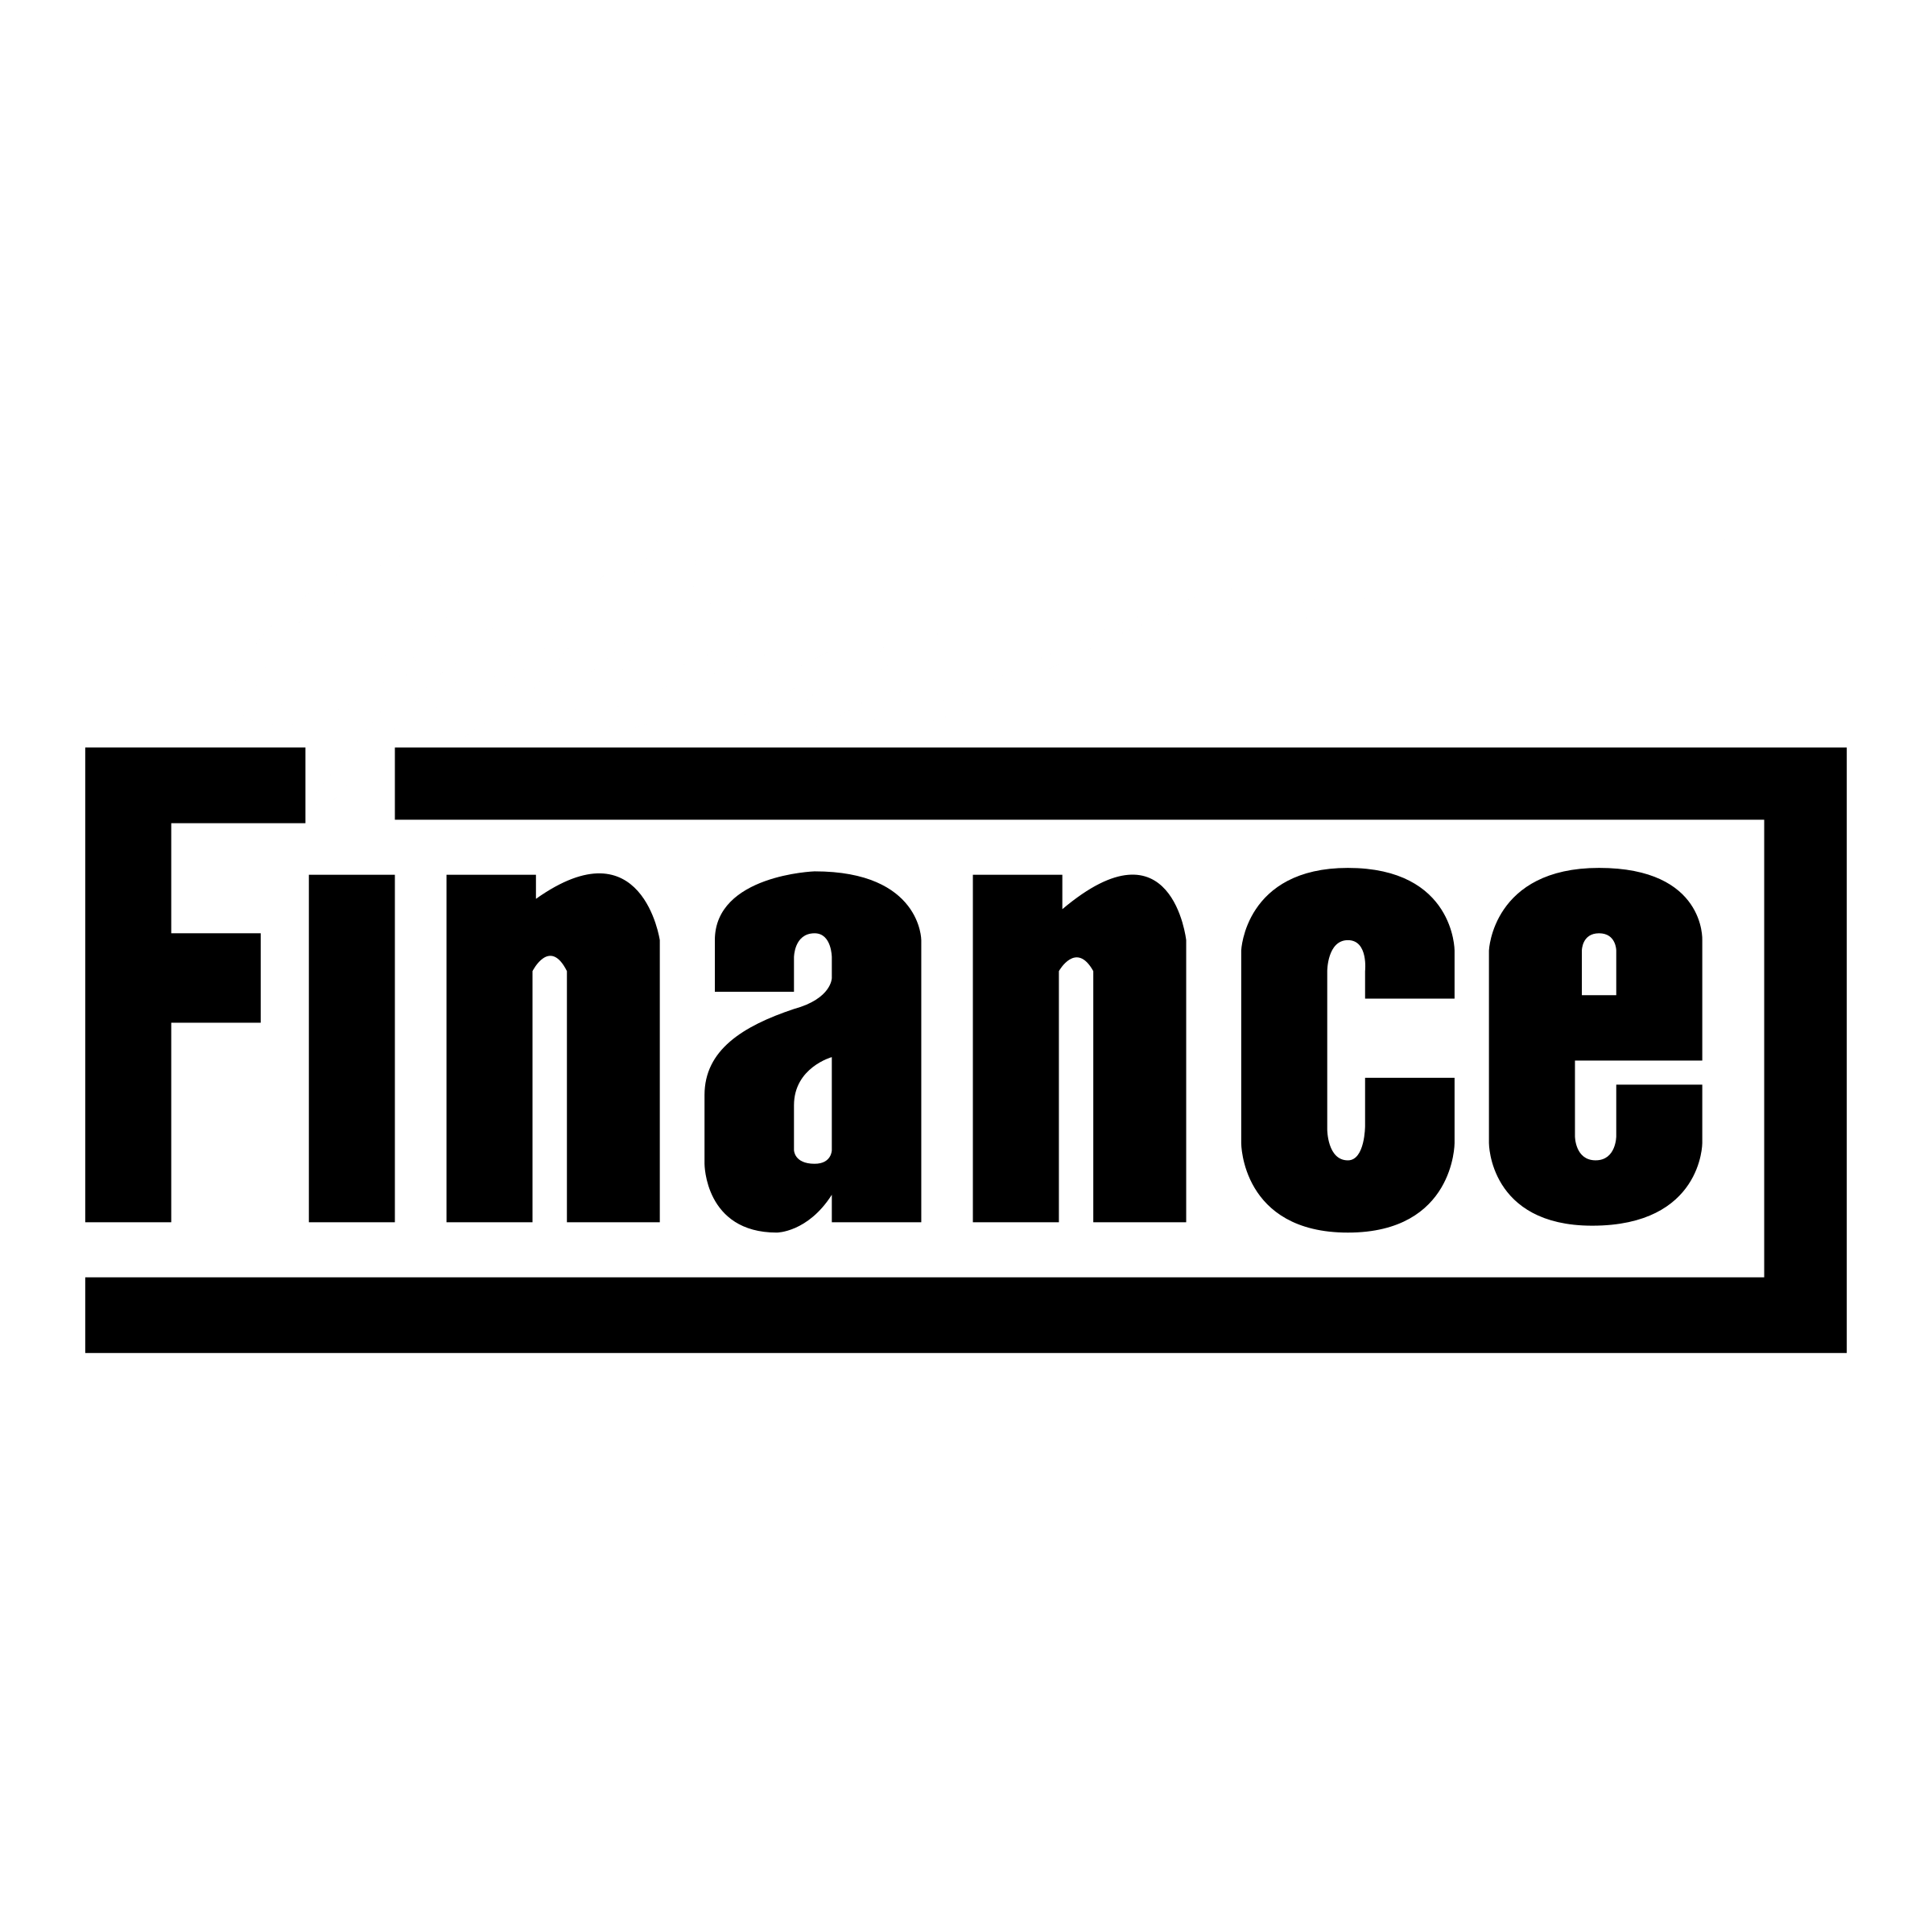 finance-option-1-logo-black-and-white